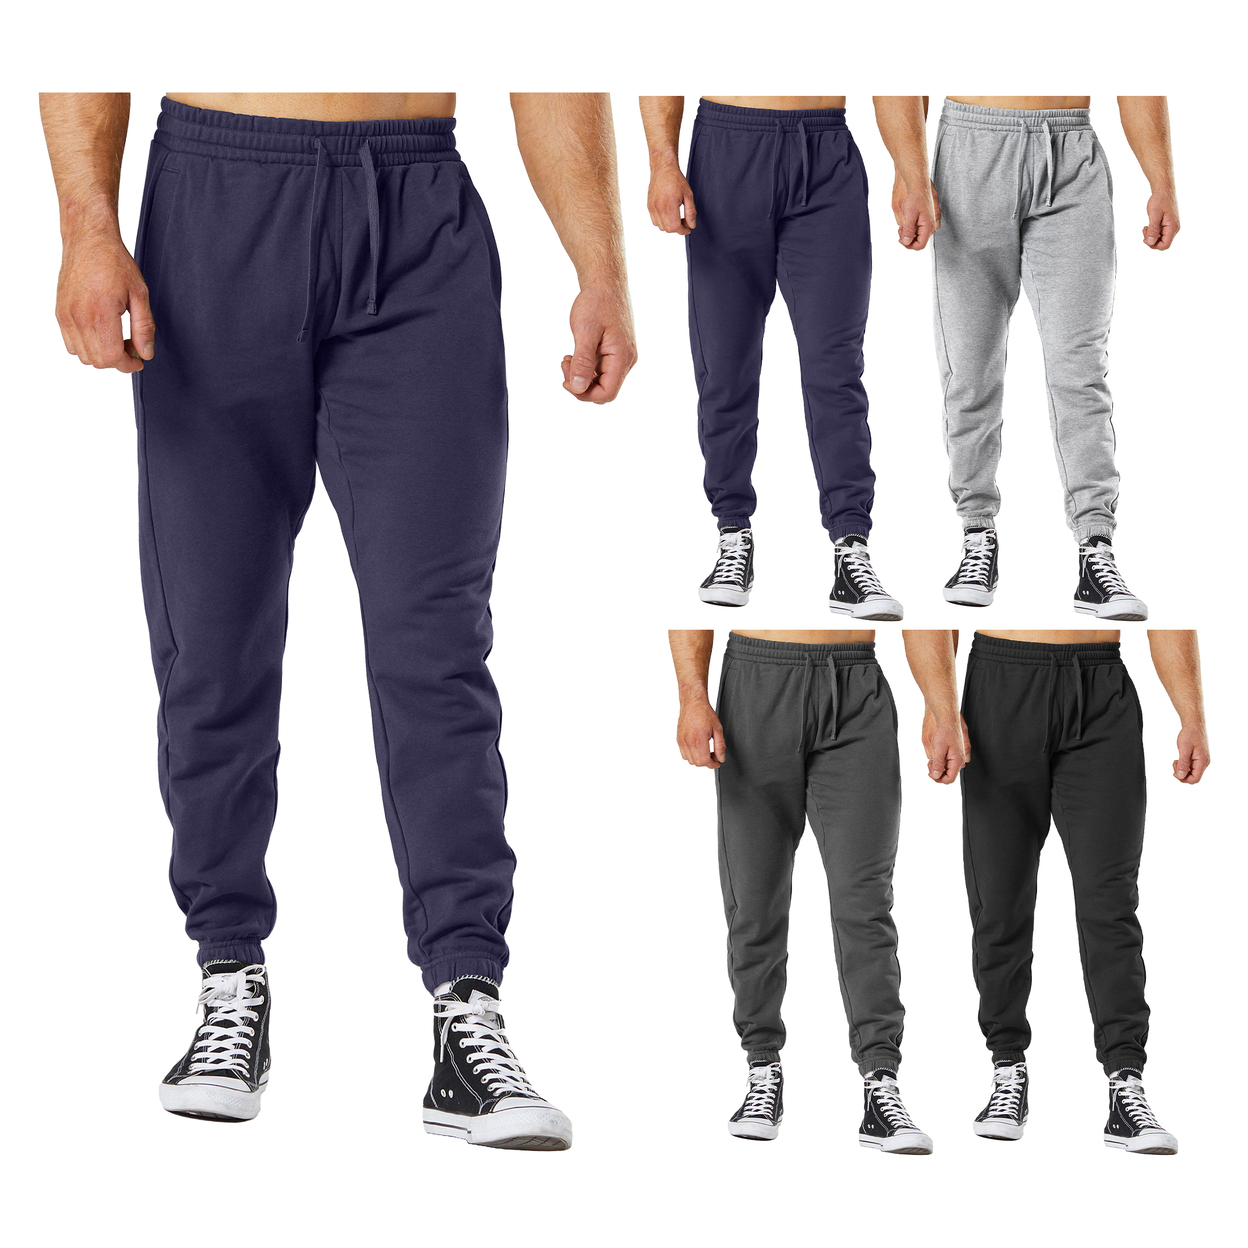 4-Pack: Men's Ultra-Soft Cozy Winter Warm Casual Fleece-Lined Sweatpants Jogger - Large